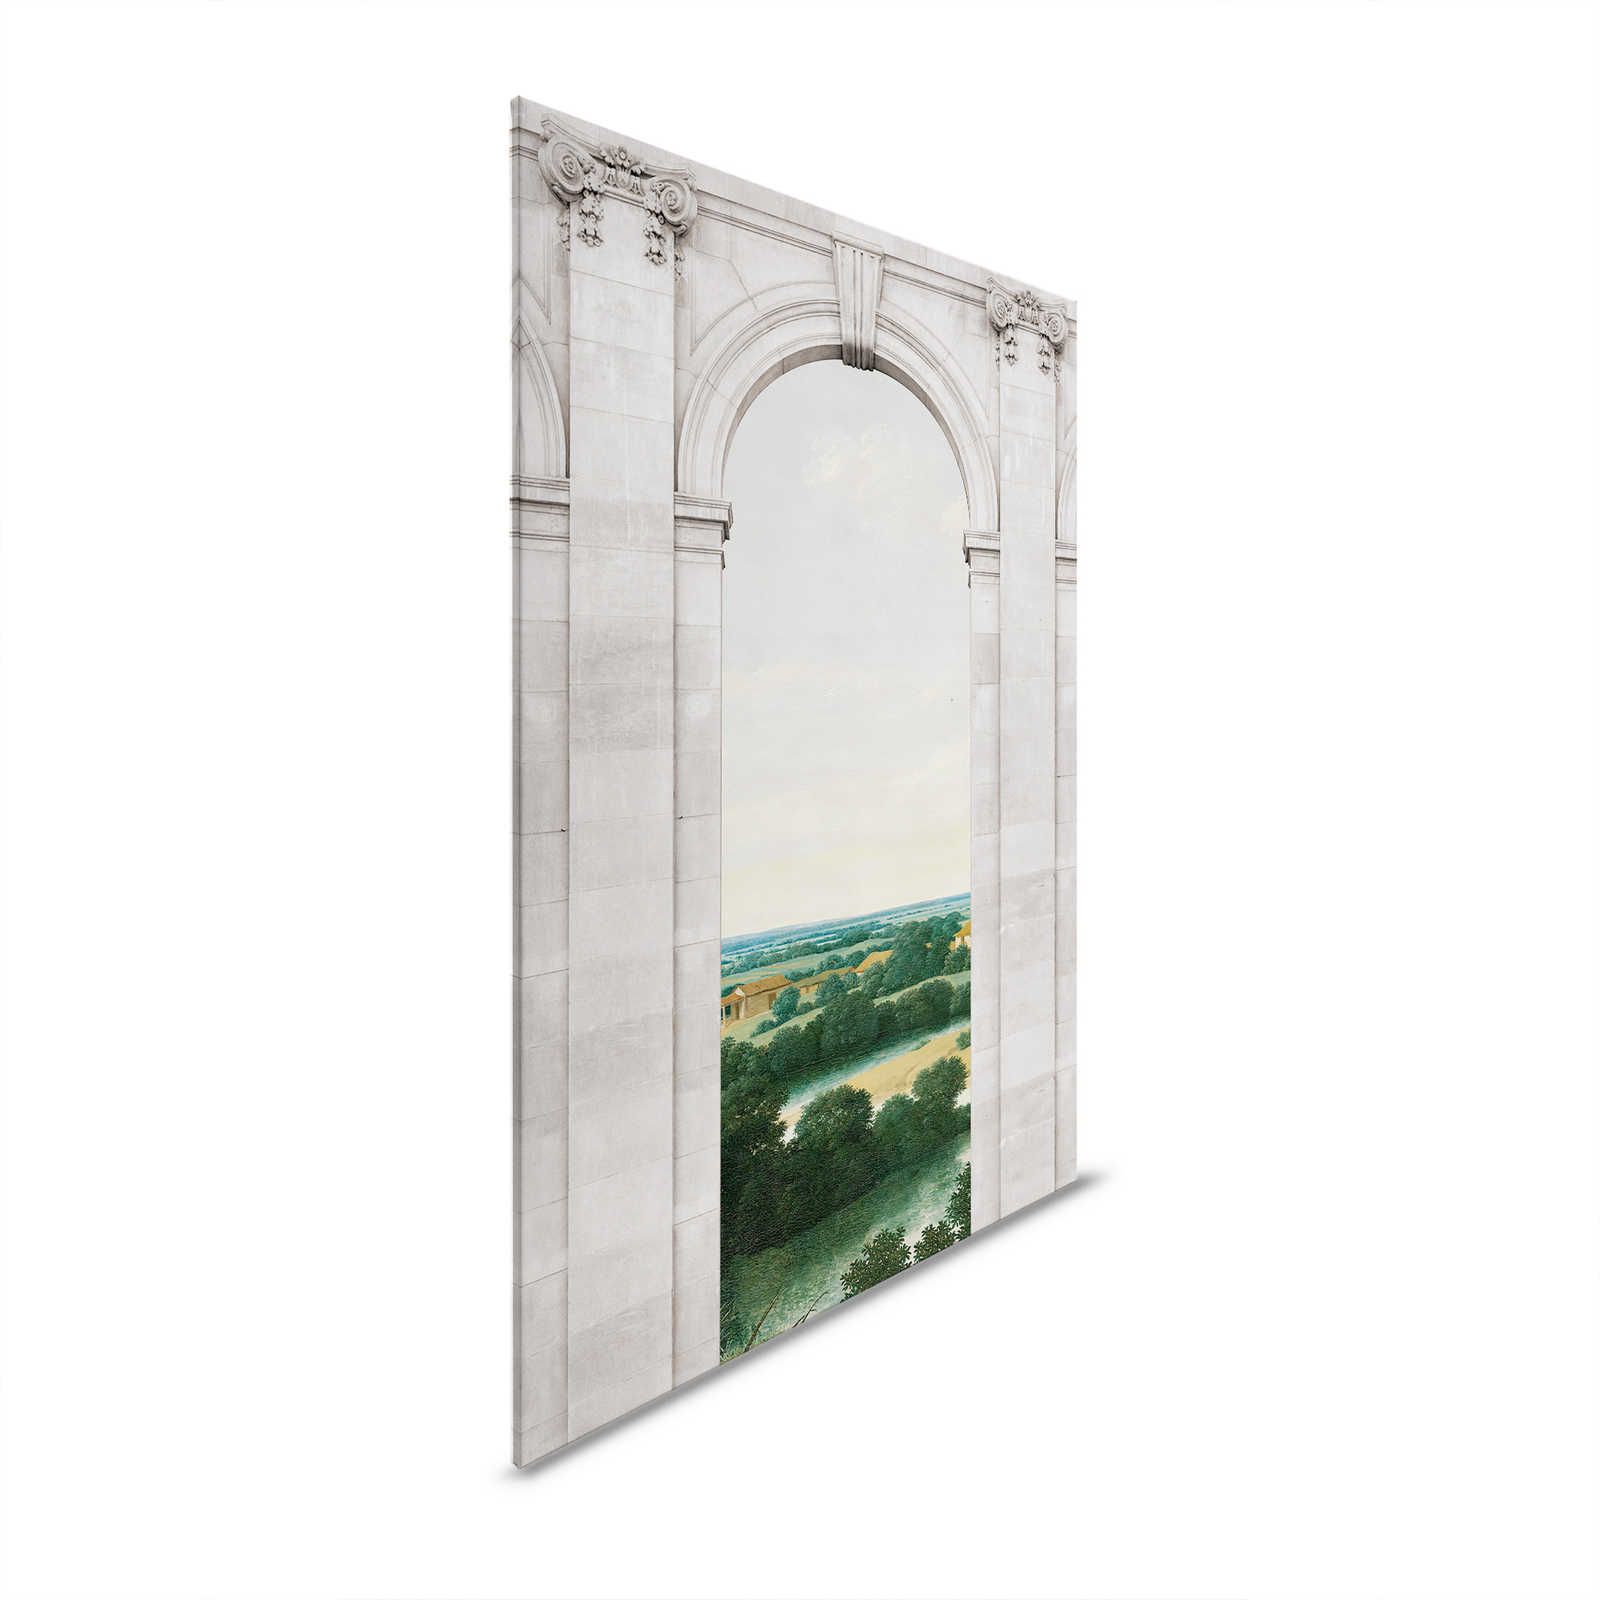         Castello 2 - Fenster Leinwandbild Rundbogen & Ausblick Landschaft – 0,90 m x 0,60 m
    